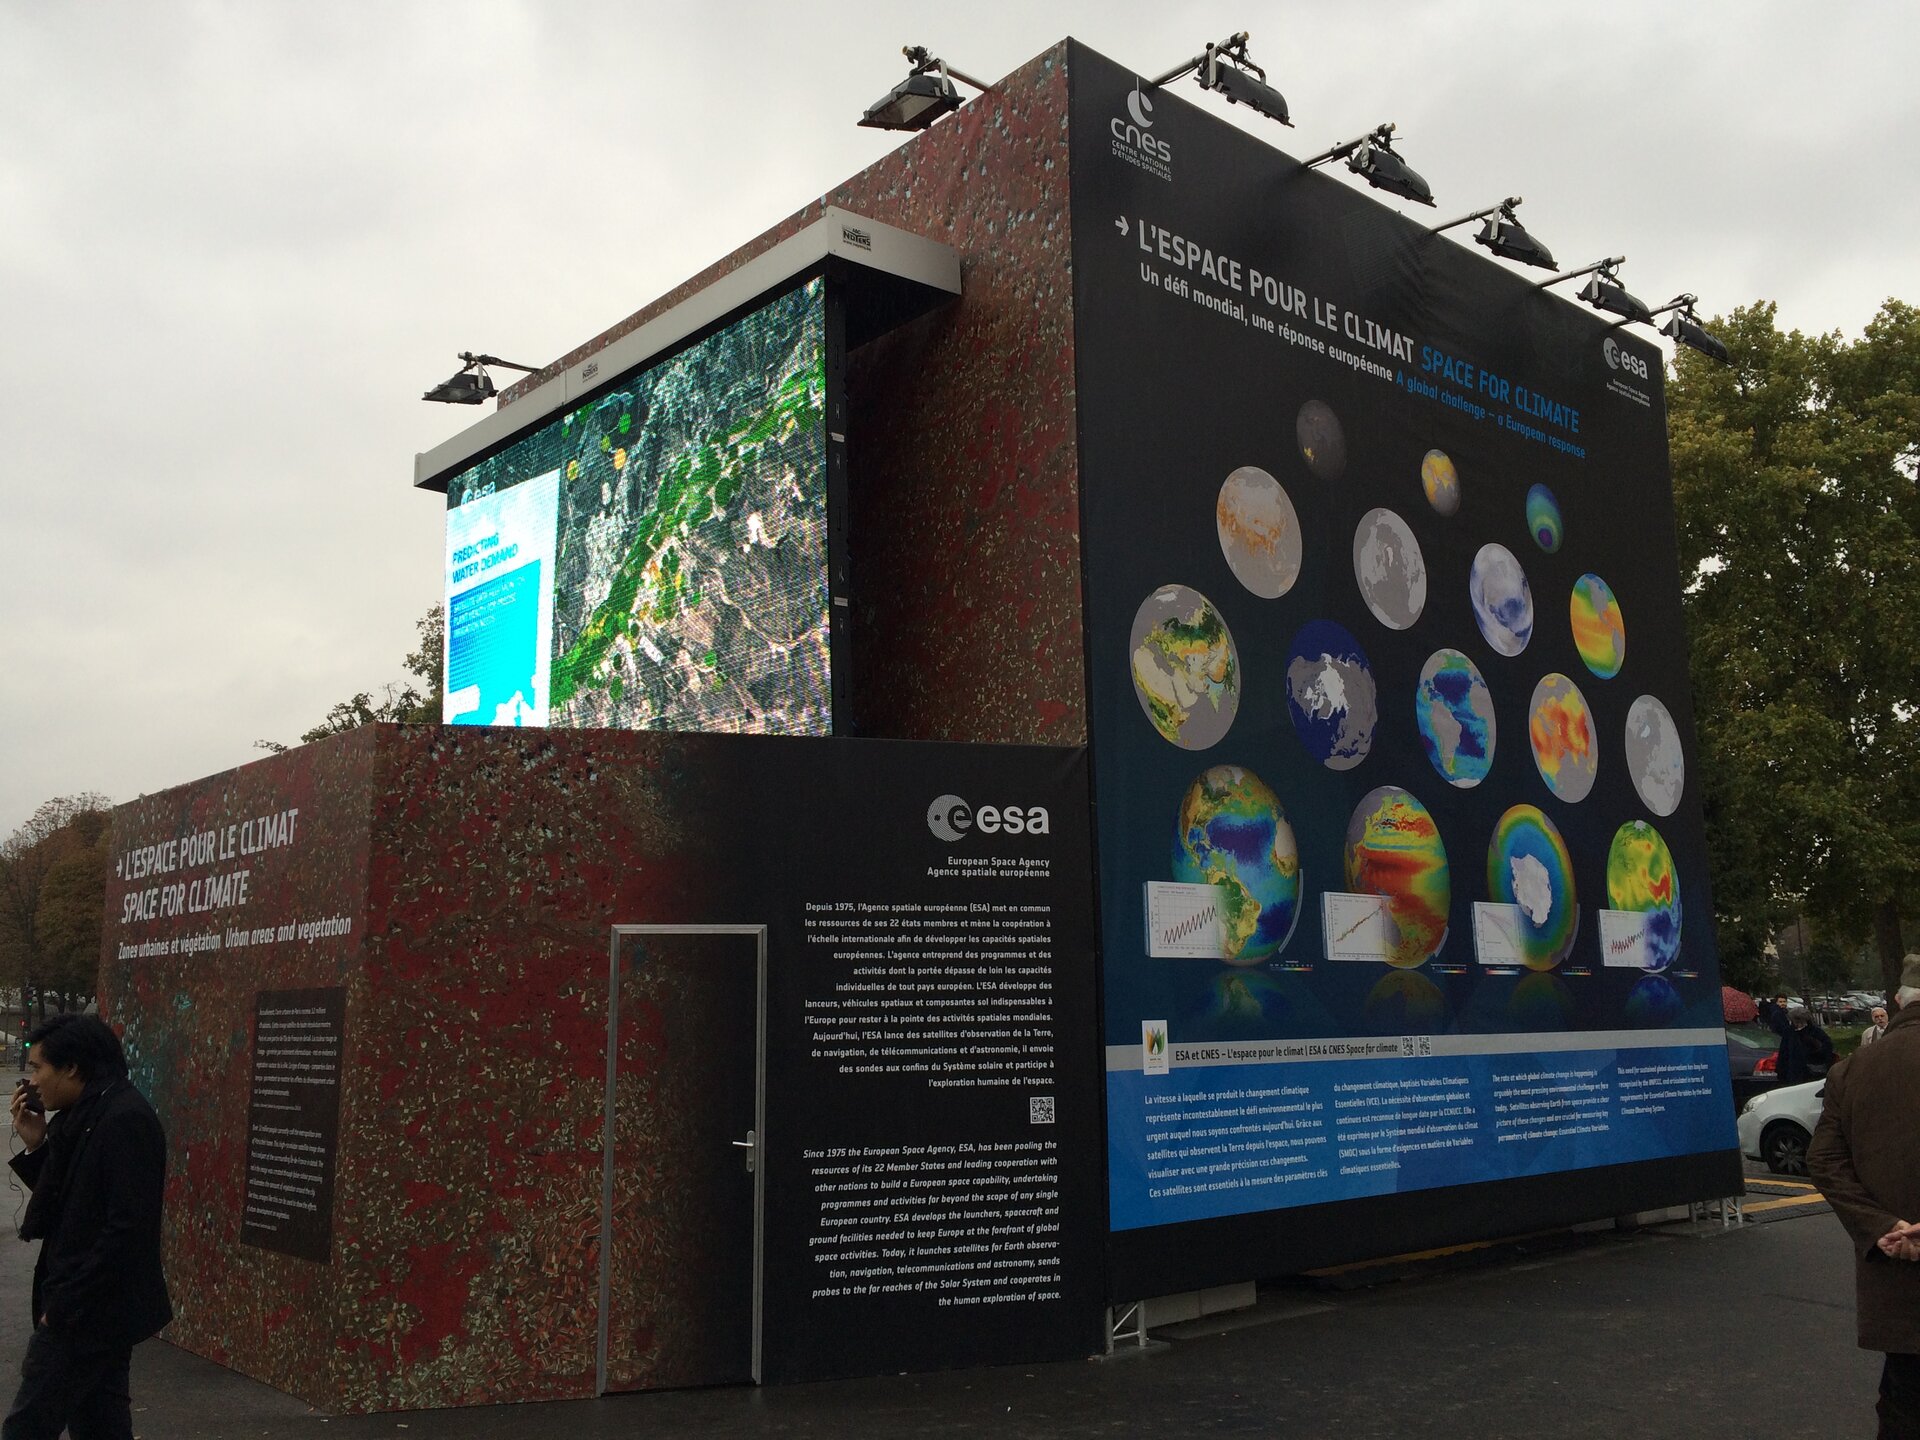 Exhibit on "Space for Climate" at the Champs-Elysées Avenue in Paris